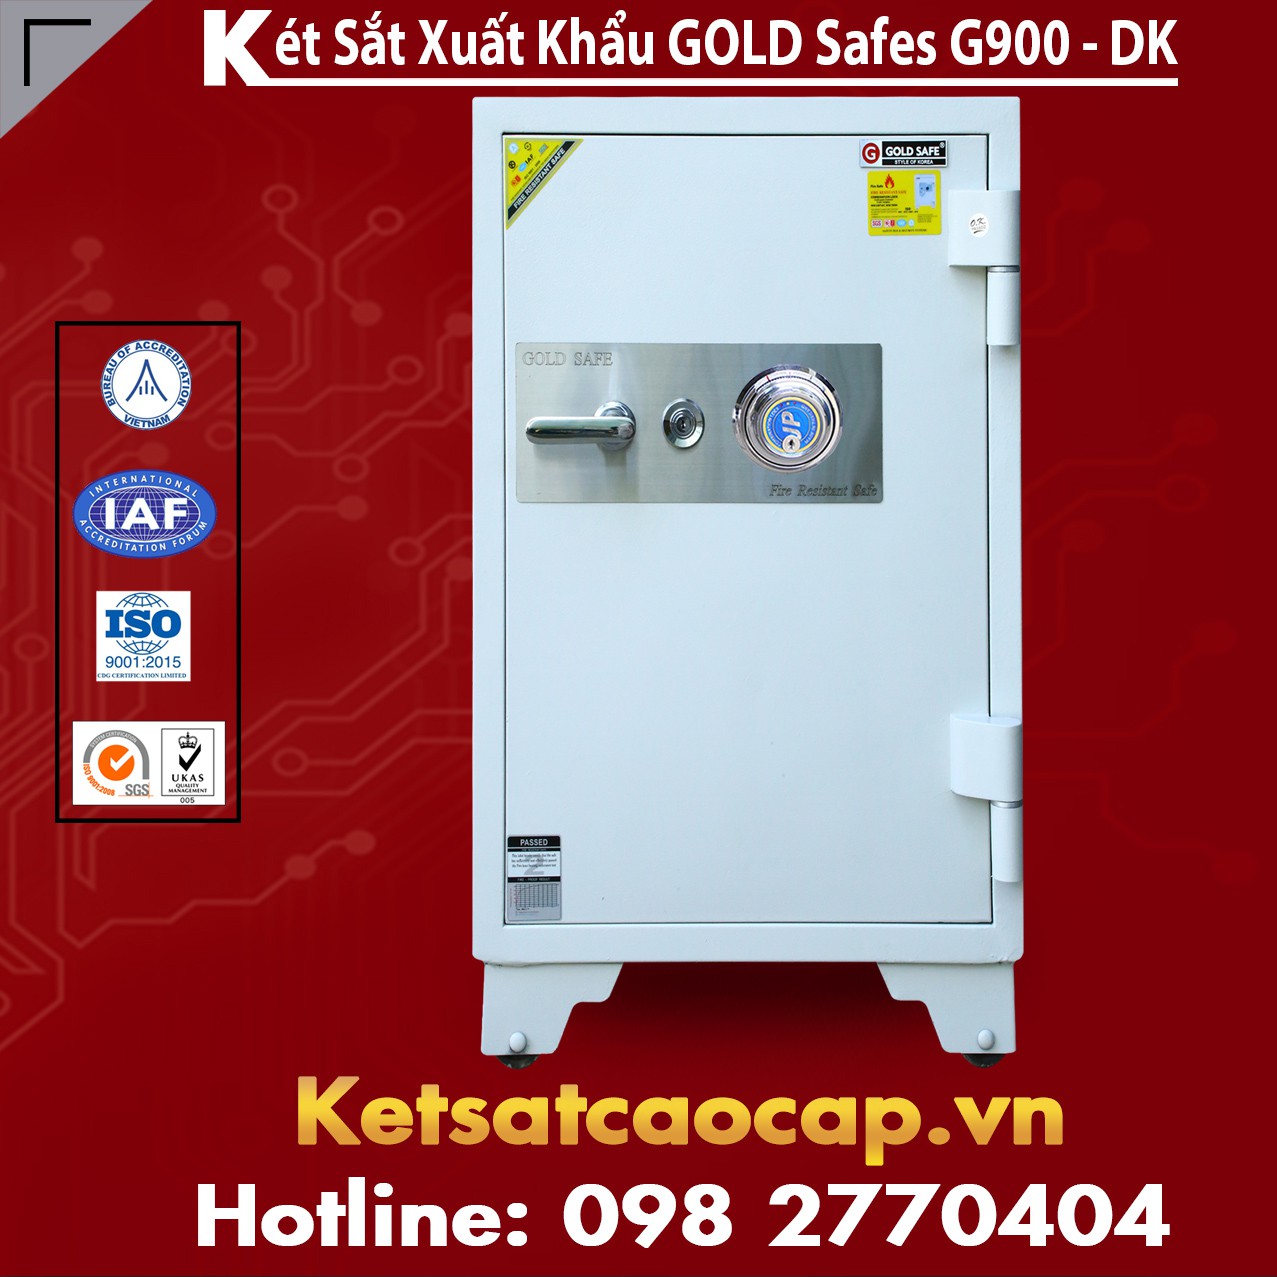 Két Sắt Phú Quý GOLD SAFES G900 DK White